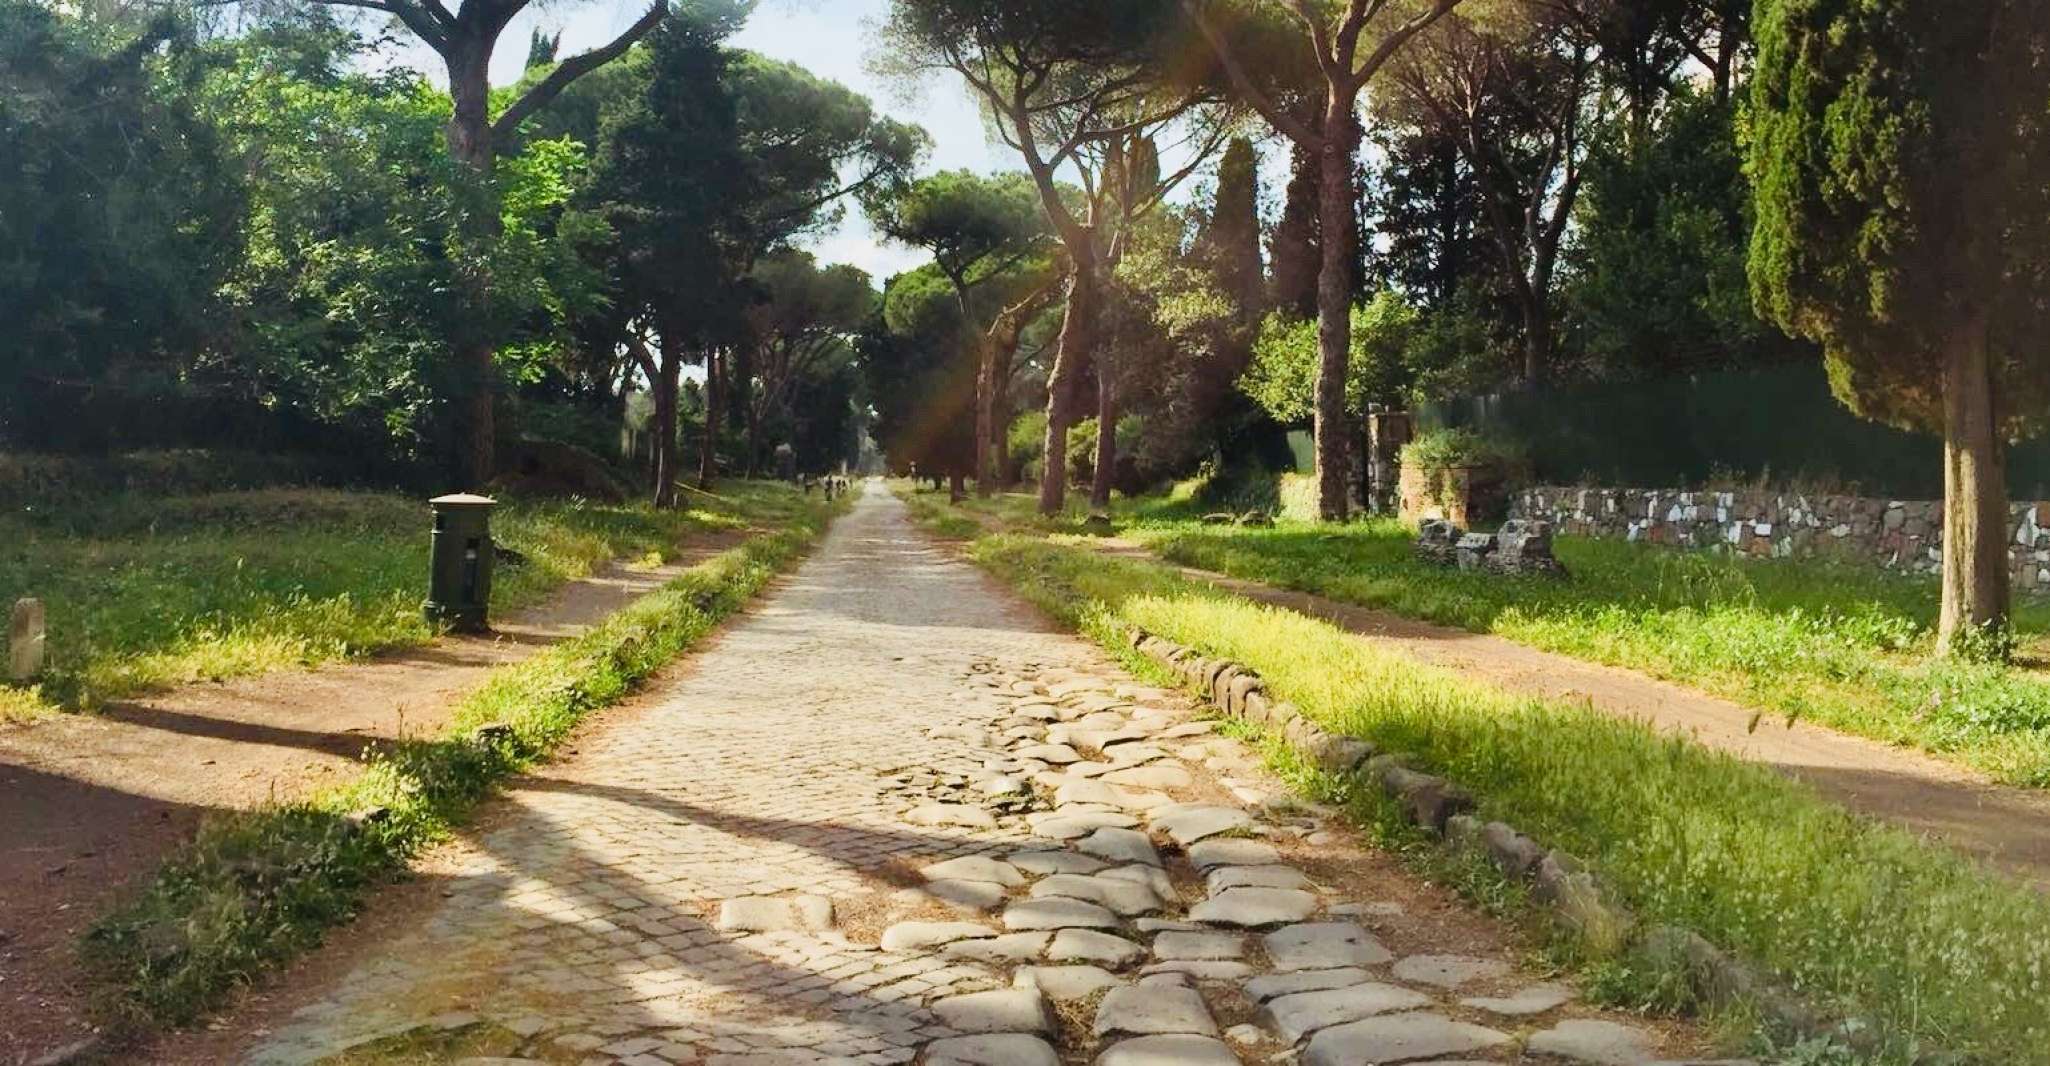 Rome,Appian Way E-bike Tour with Catacombs, Aqueducts & Food - Housity